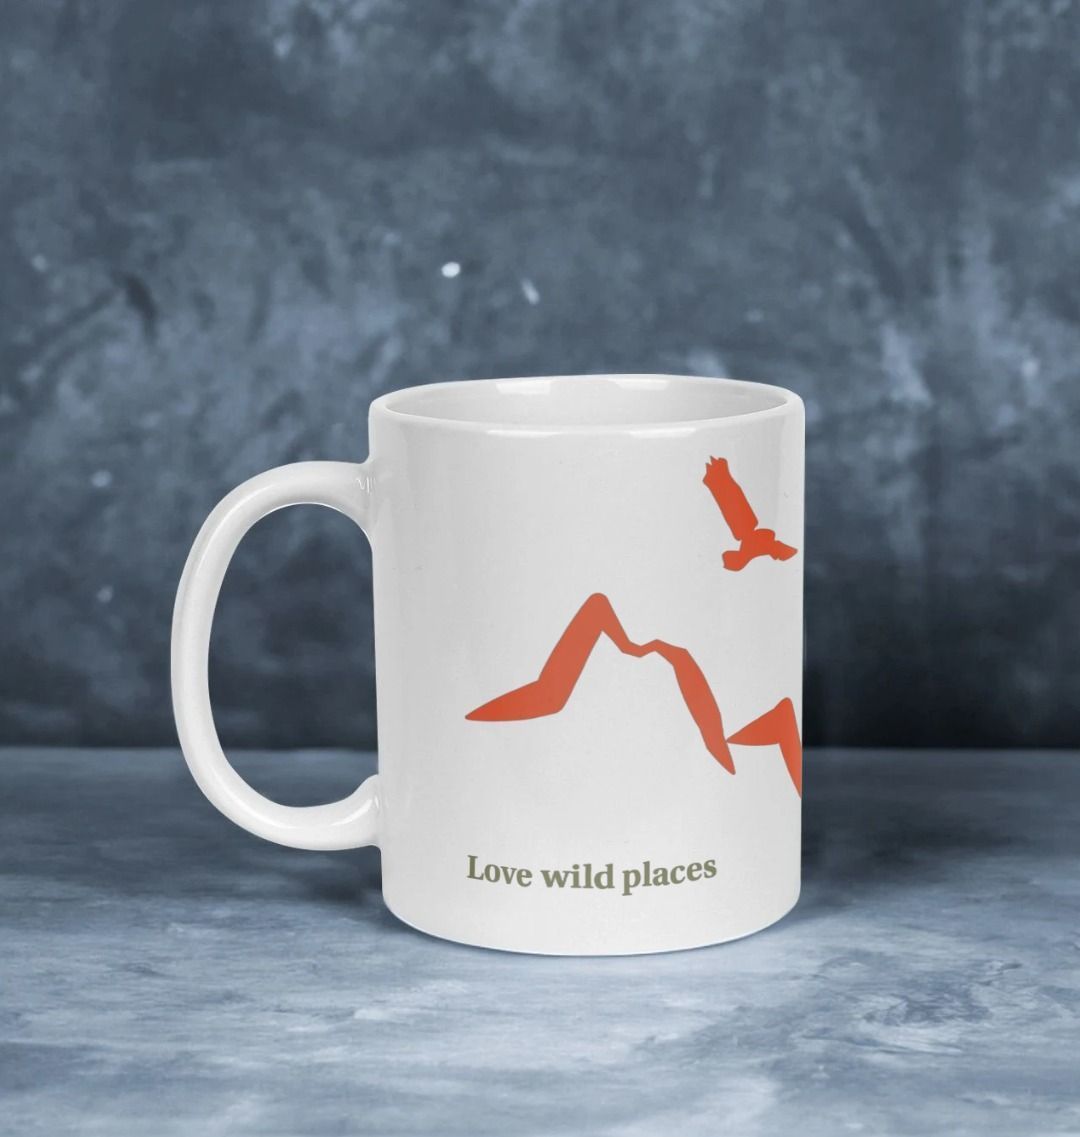 Love wild places mug (Autumn leaf)